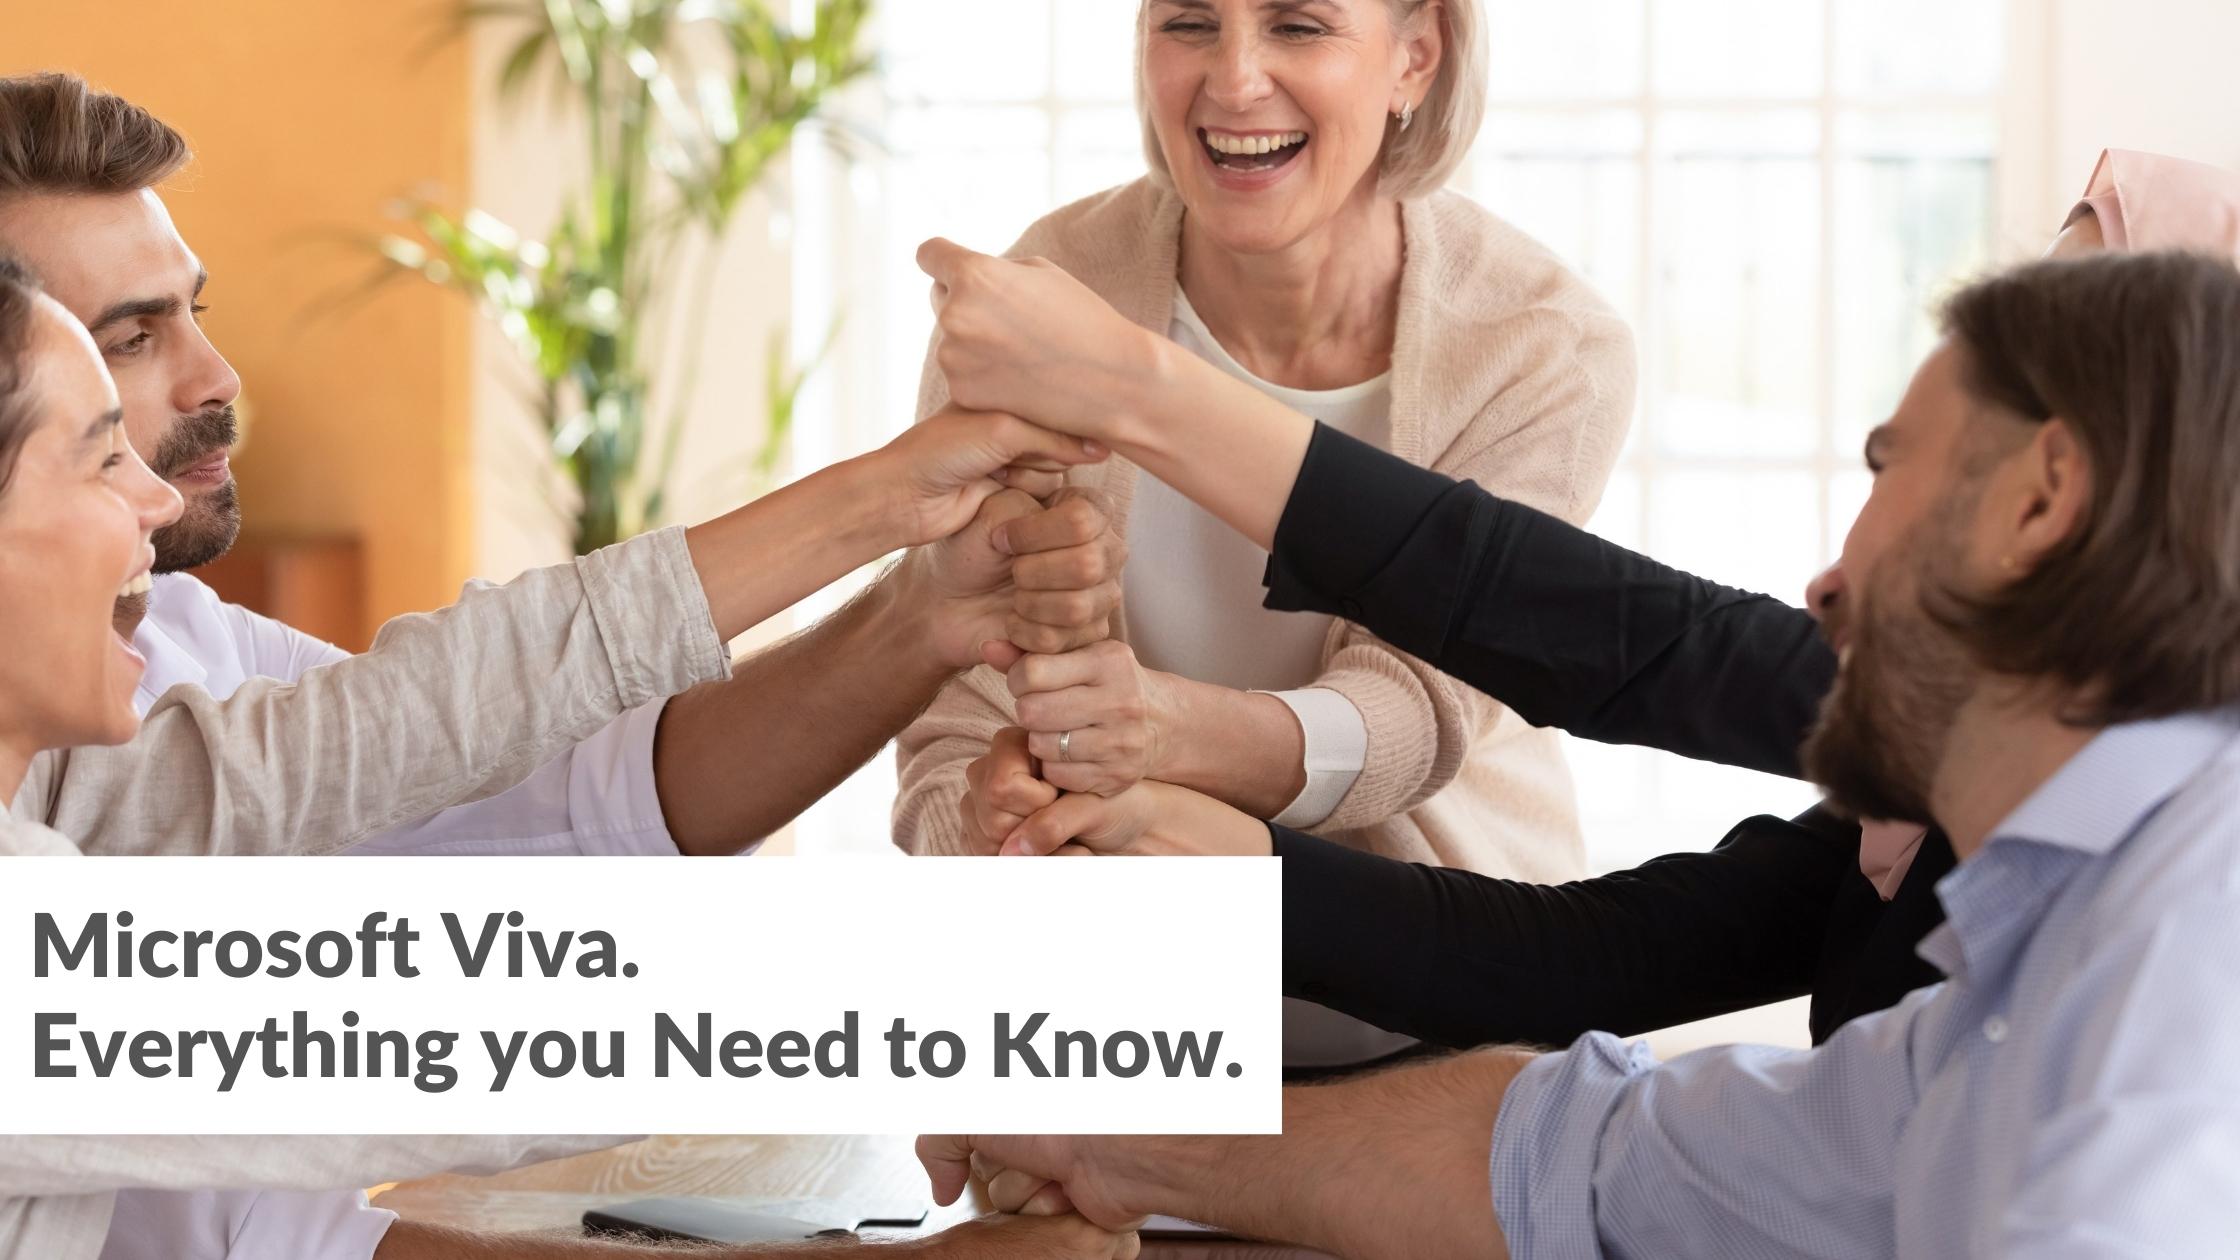 Microsoft Viva. Everything you Need to Know.